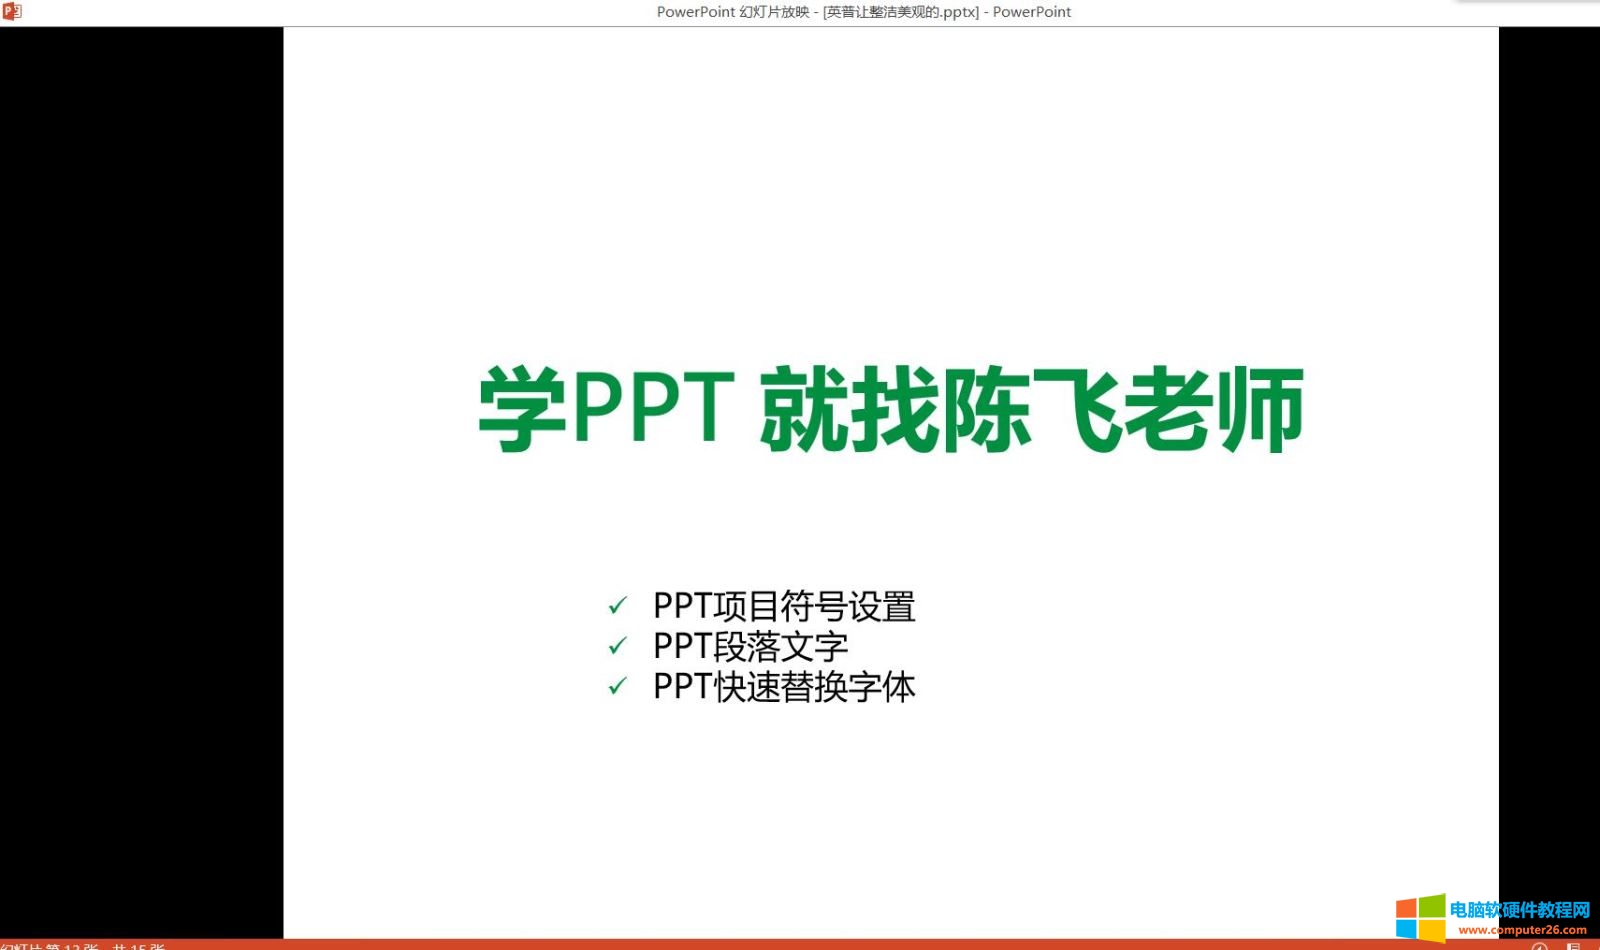 PPT2016基础入门教程-视图介绍